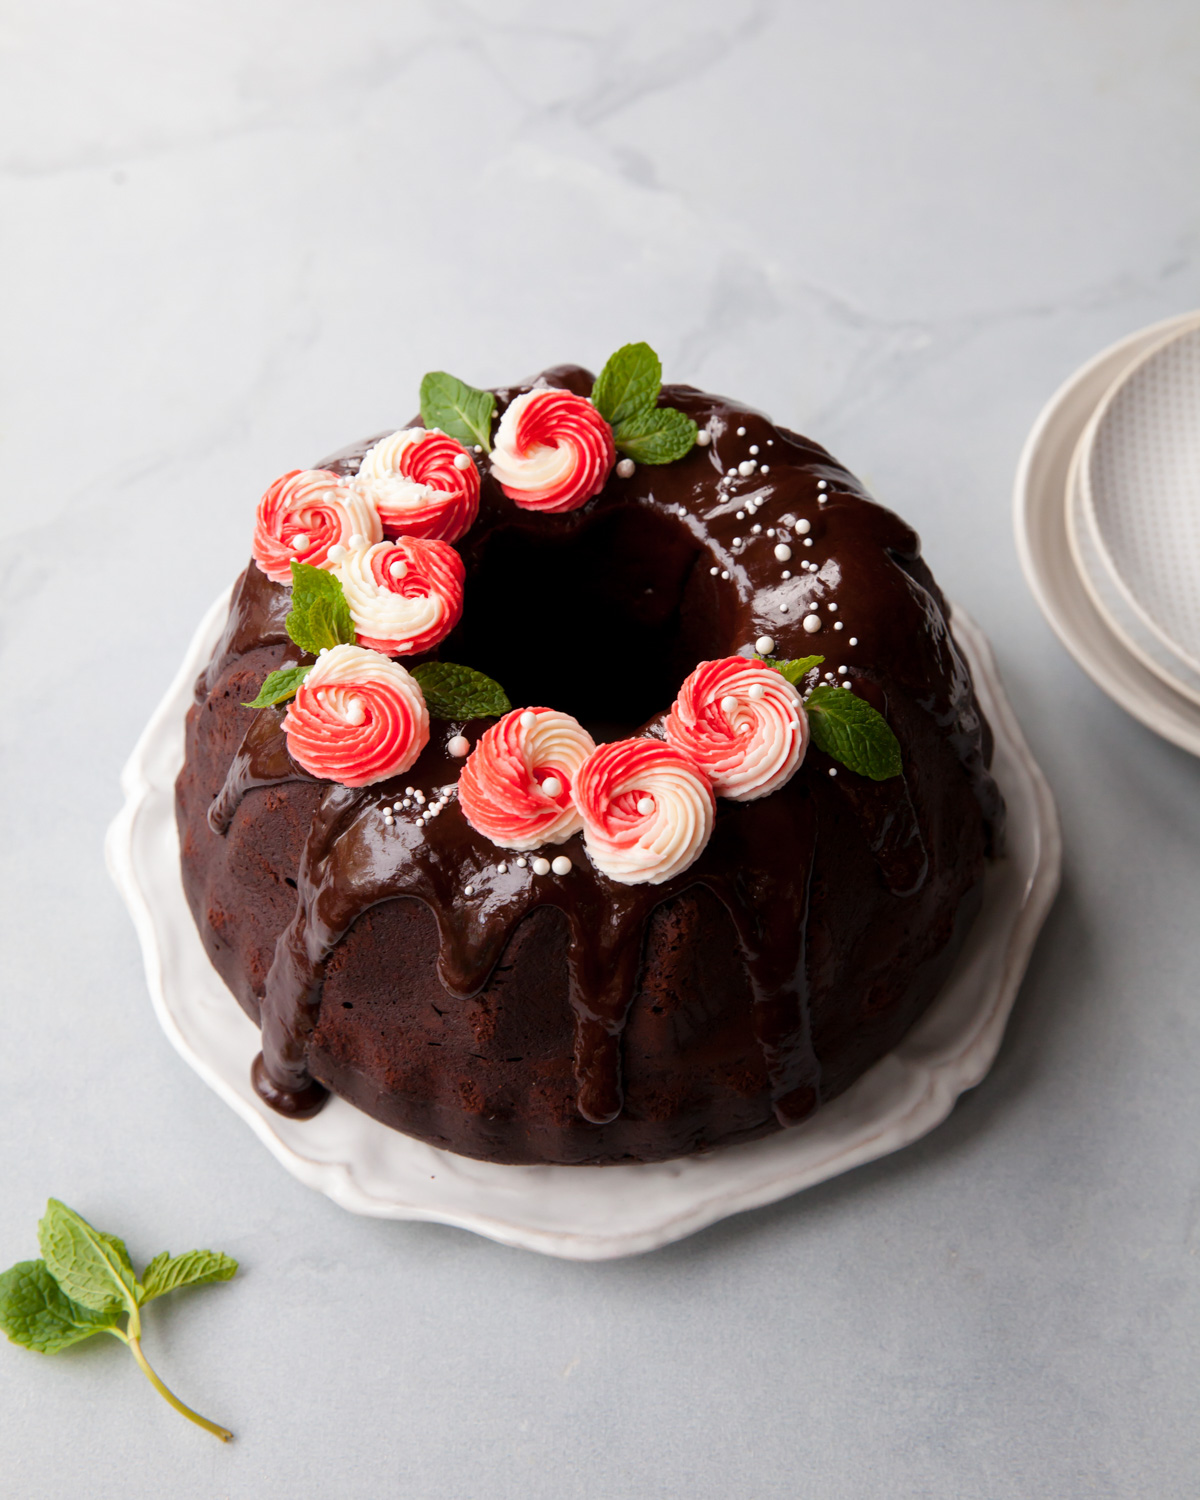 A chocolate bundt cake with chocolate peppermint glaze